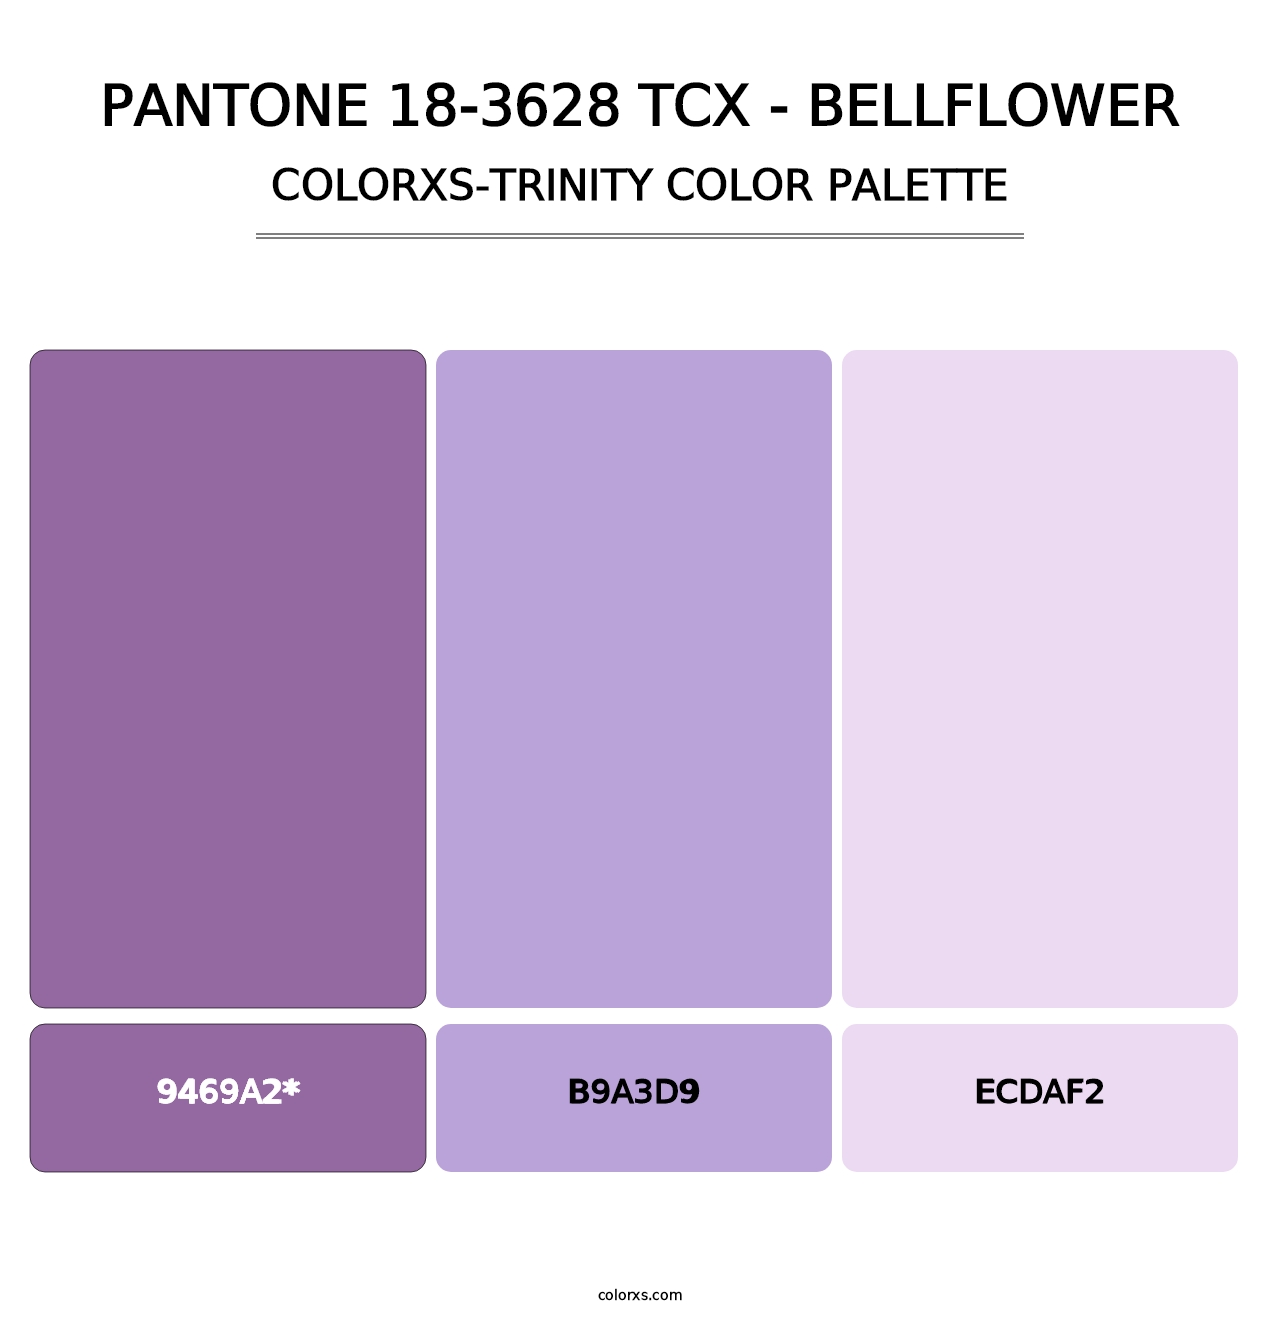 PANTONE 18-3628 TCX - Bellflower - Colorxs Trinity Palette